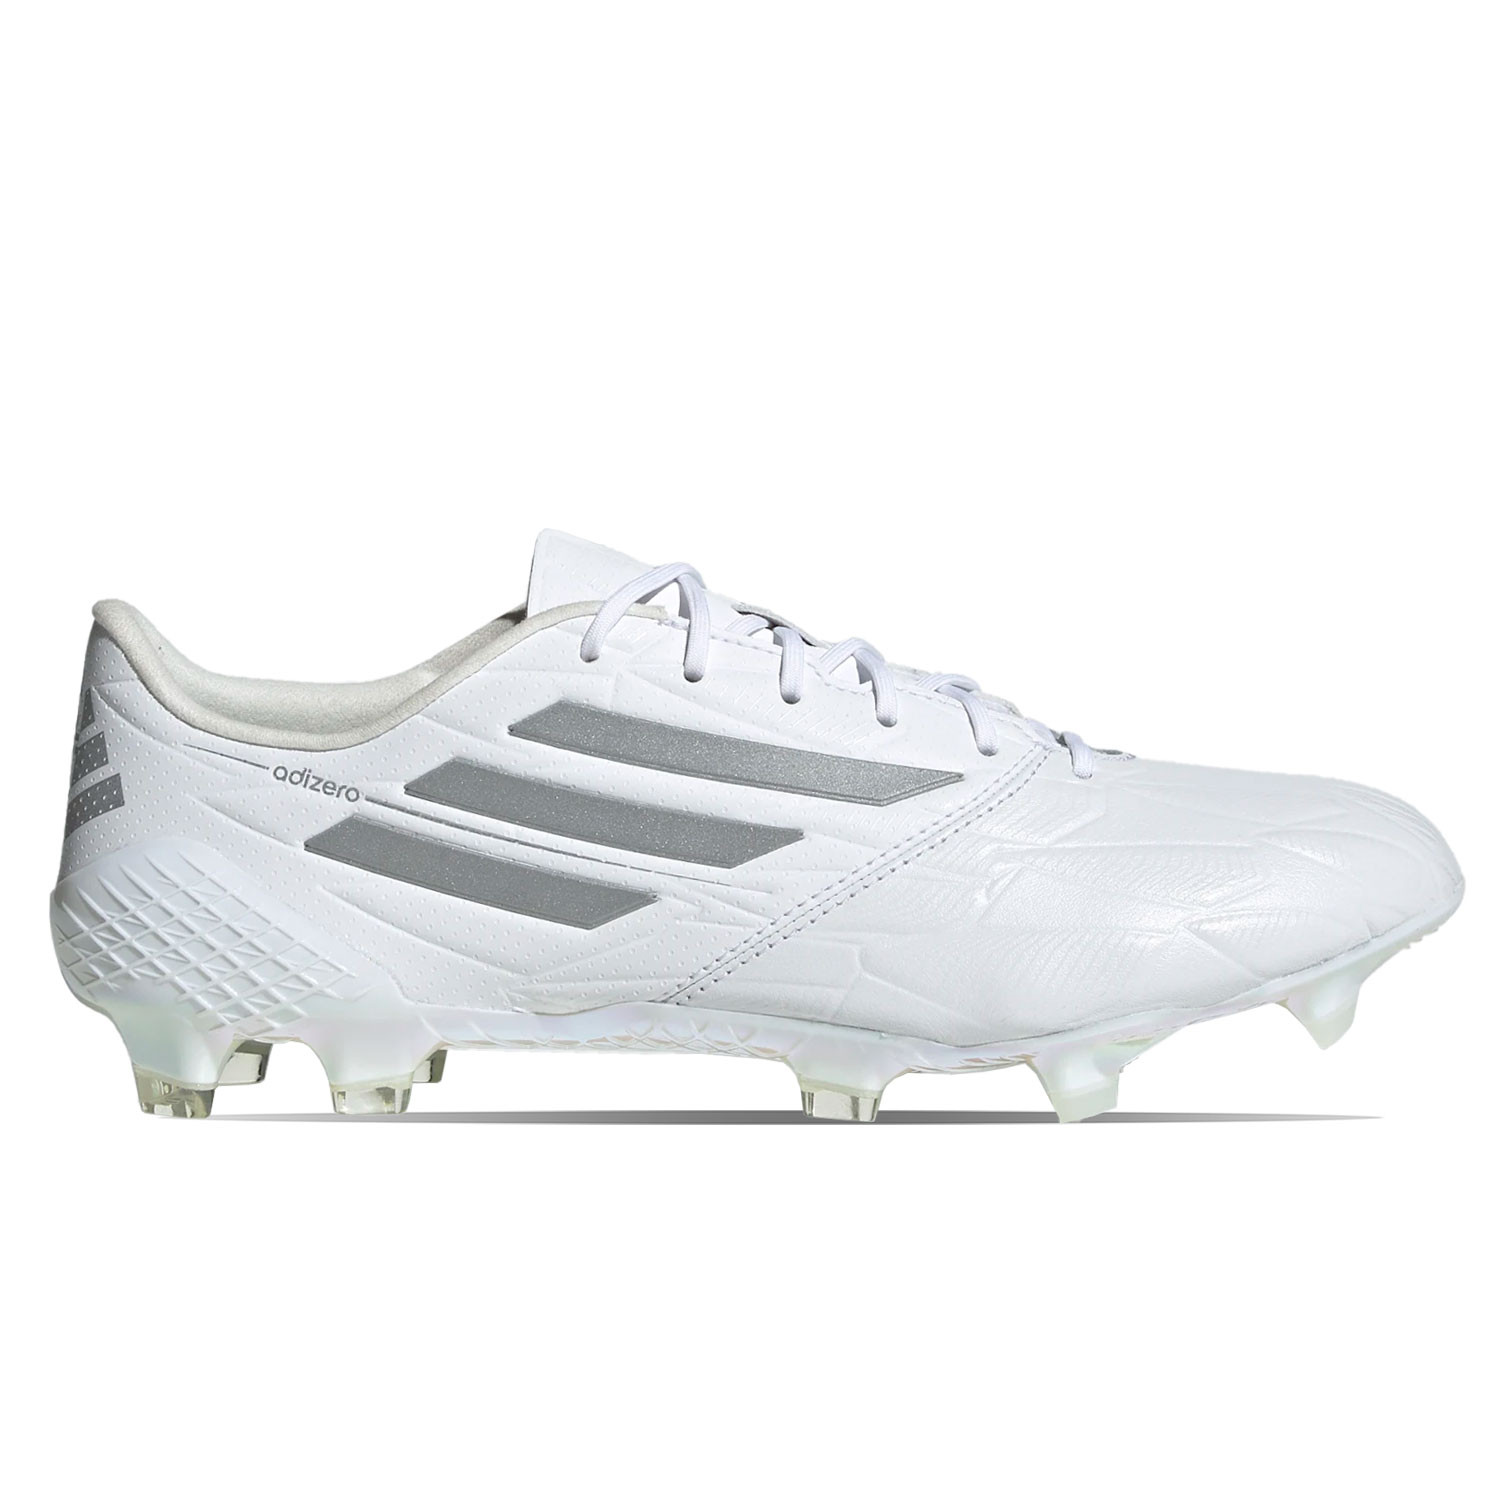 Botas fútbol adidas F50 adizero Leather FG blancas | futbolmania